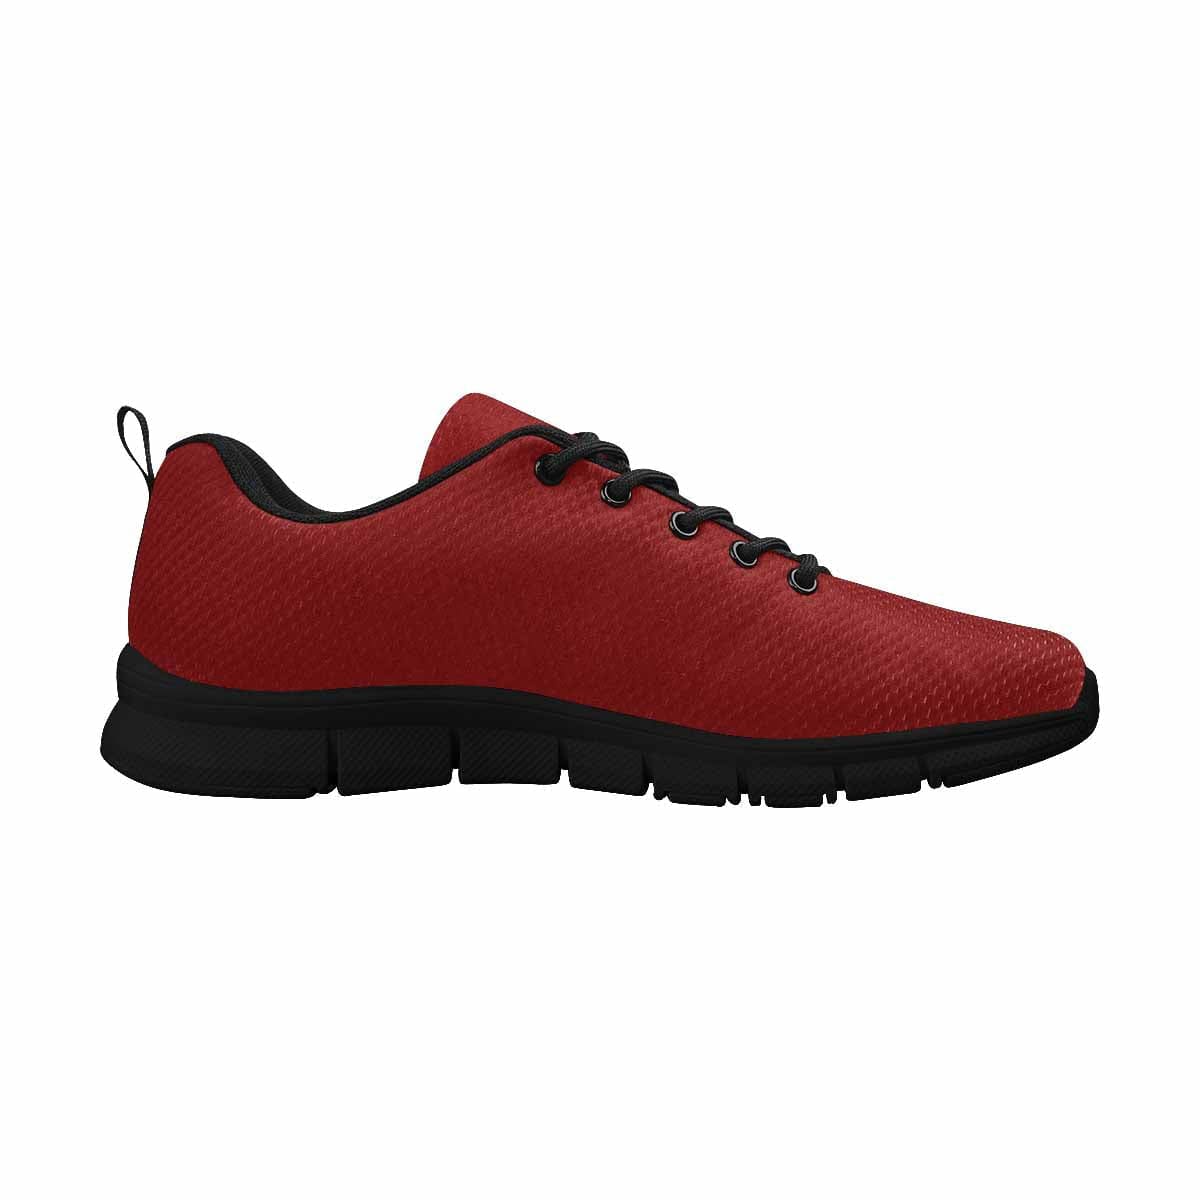 Sneakers For Men Maroon Red Running Shoes - Mens | Sneakers | Running